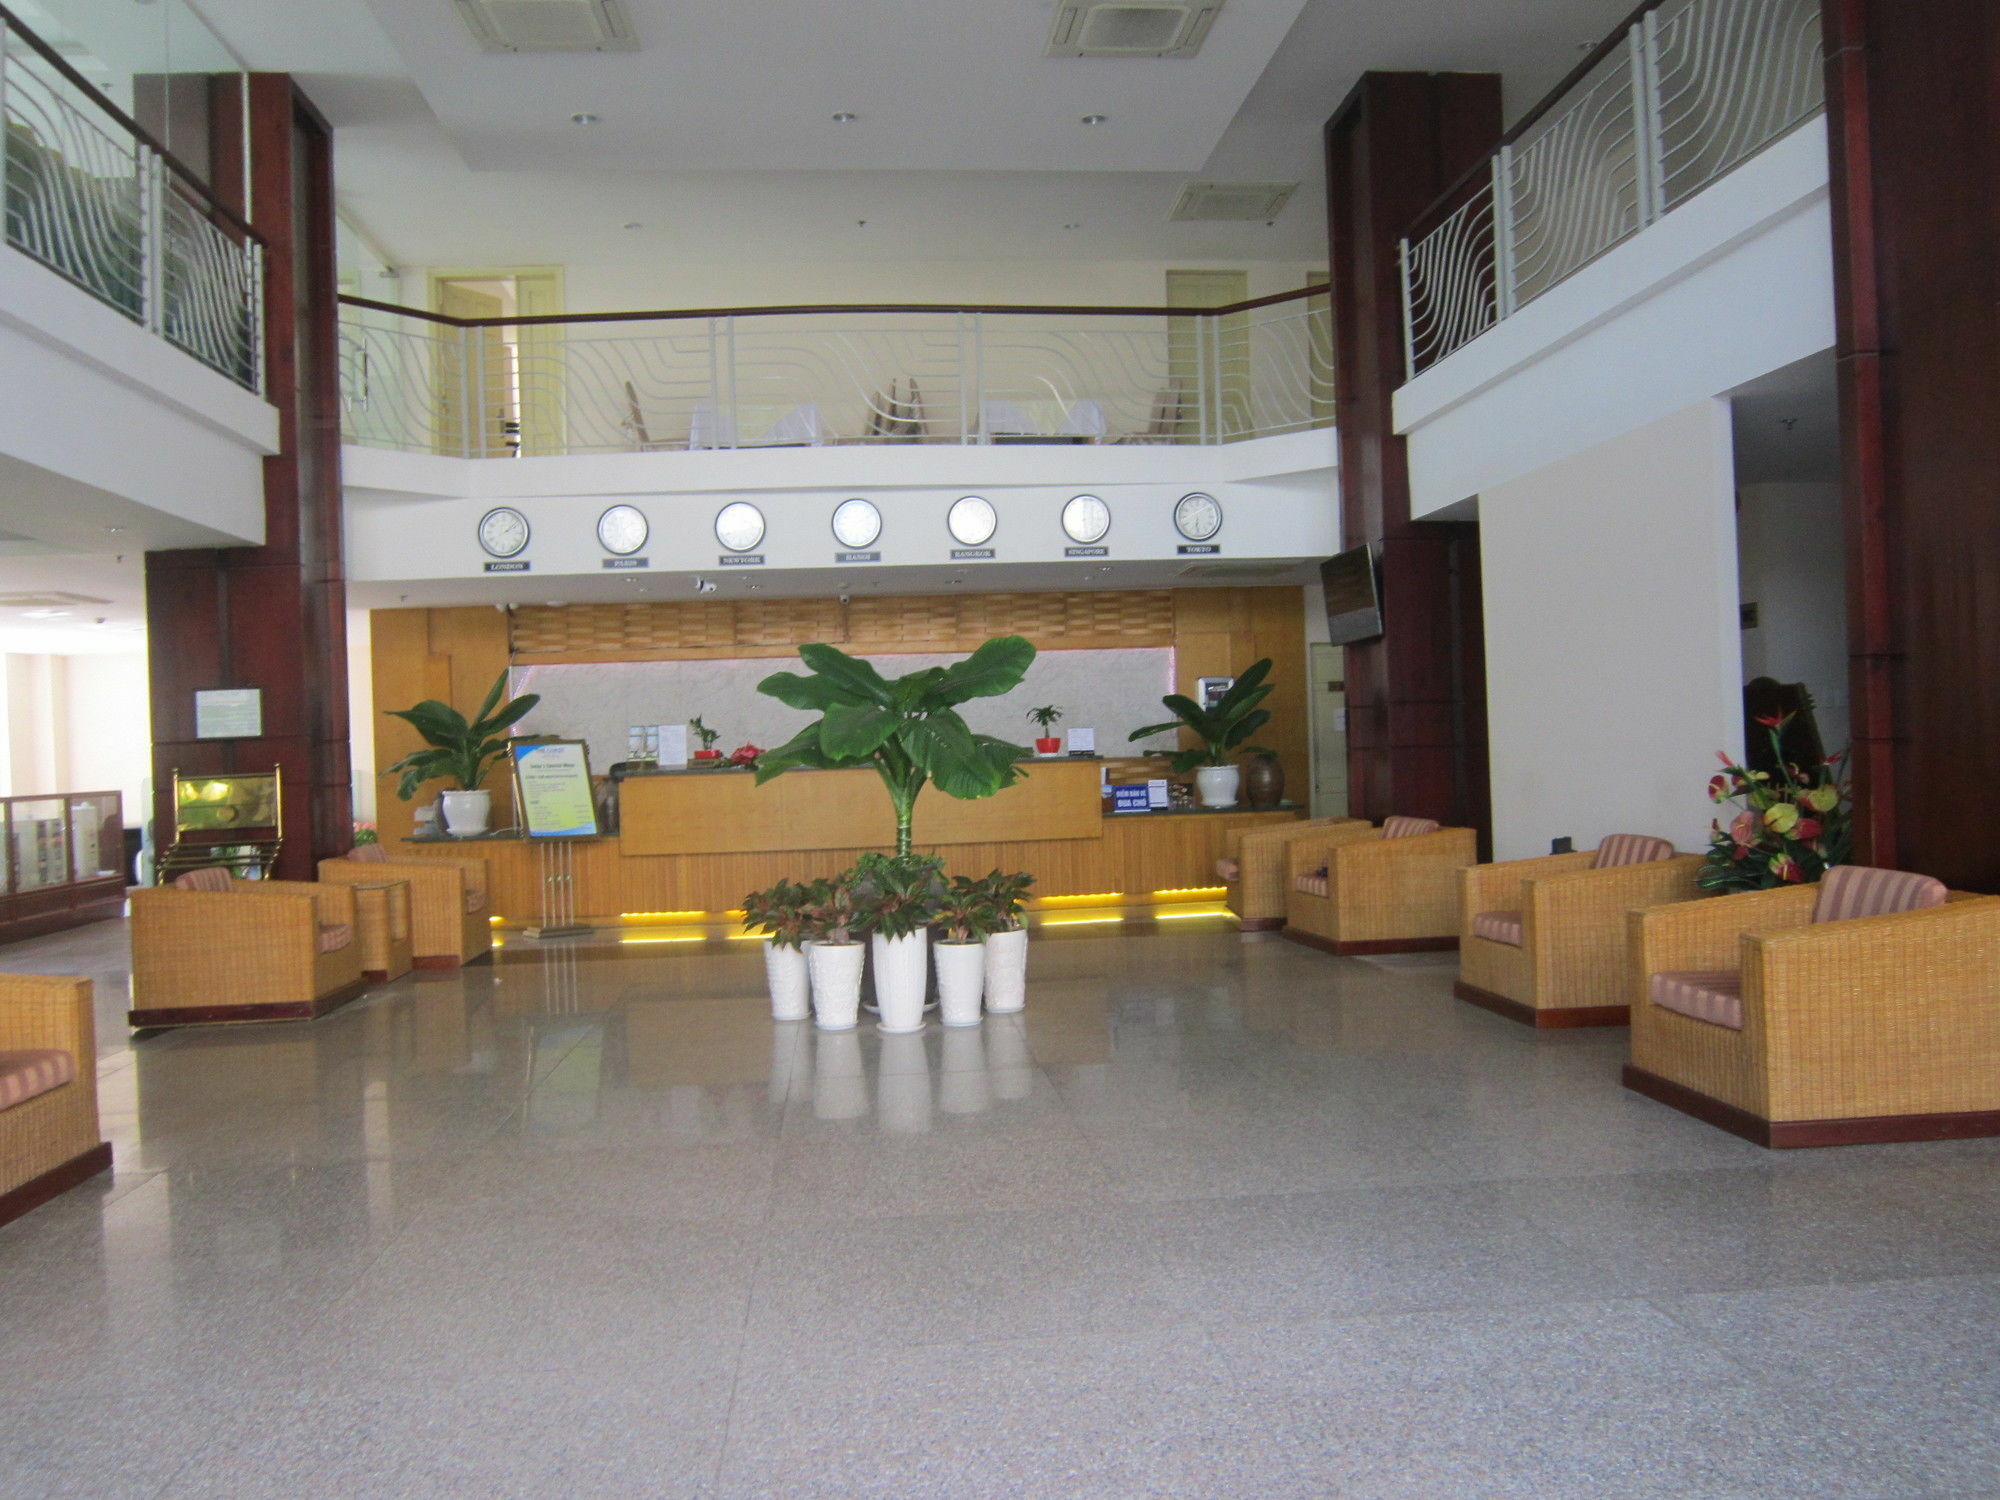 The Coast Hotel Vung Tau Exterior photo